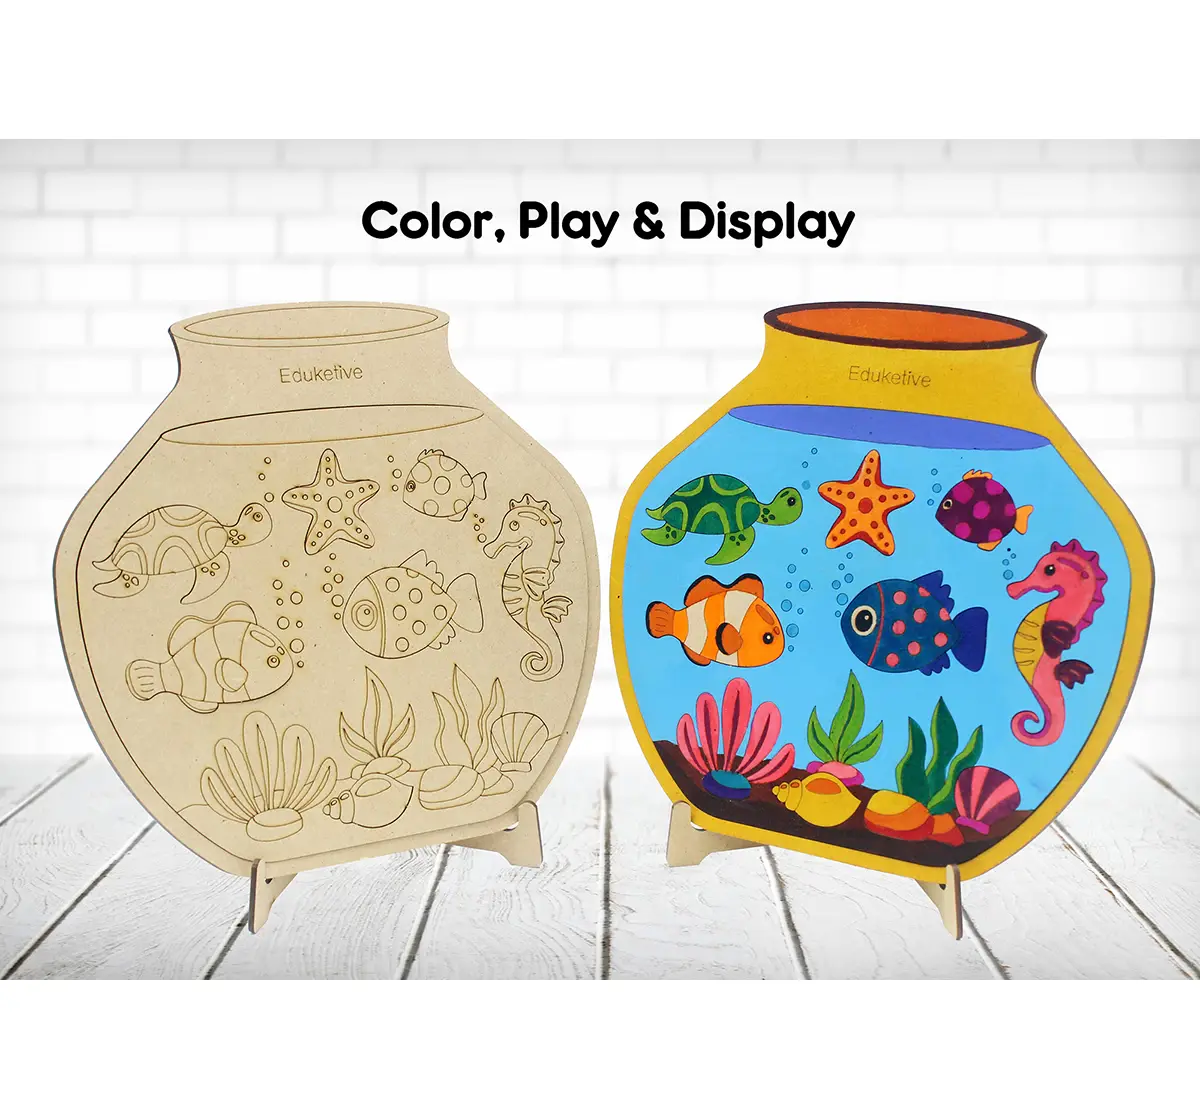 Eduketive PuzzleDecor Aquarium Decorative Coloring Puzzle with Stand 14 Pieces Kids Age 3-12 Years Old + Free Colors